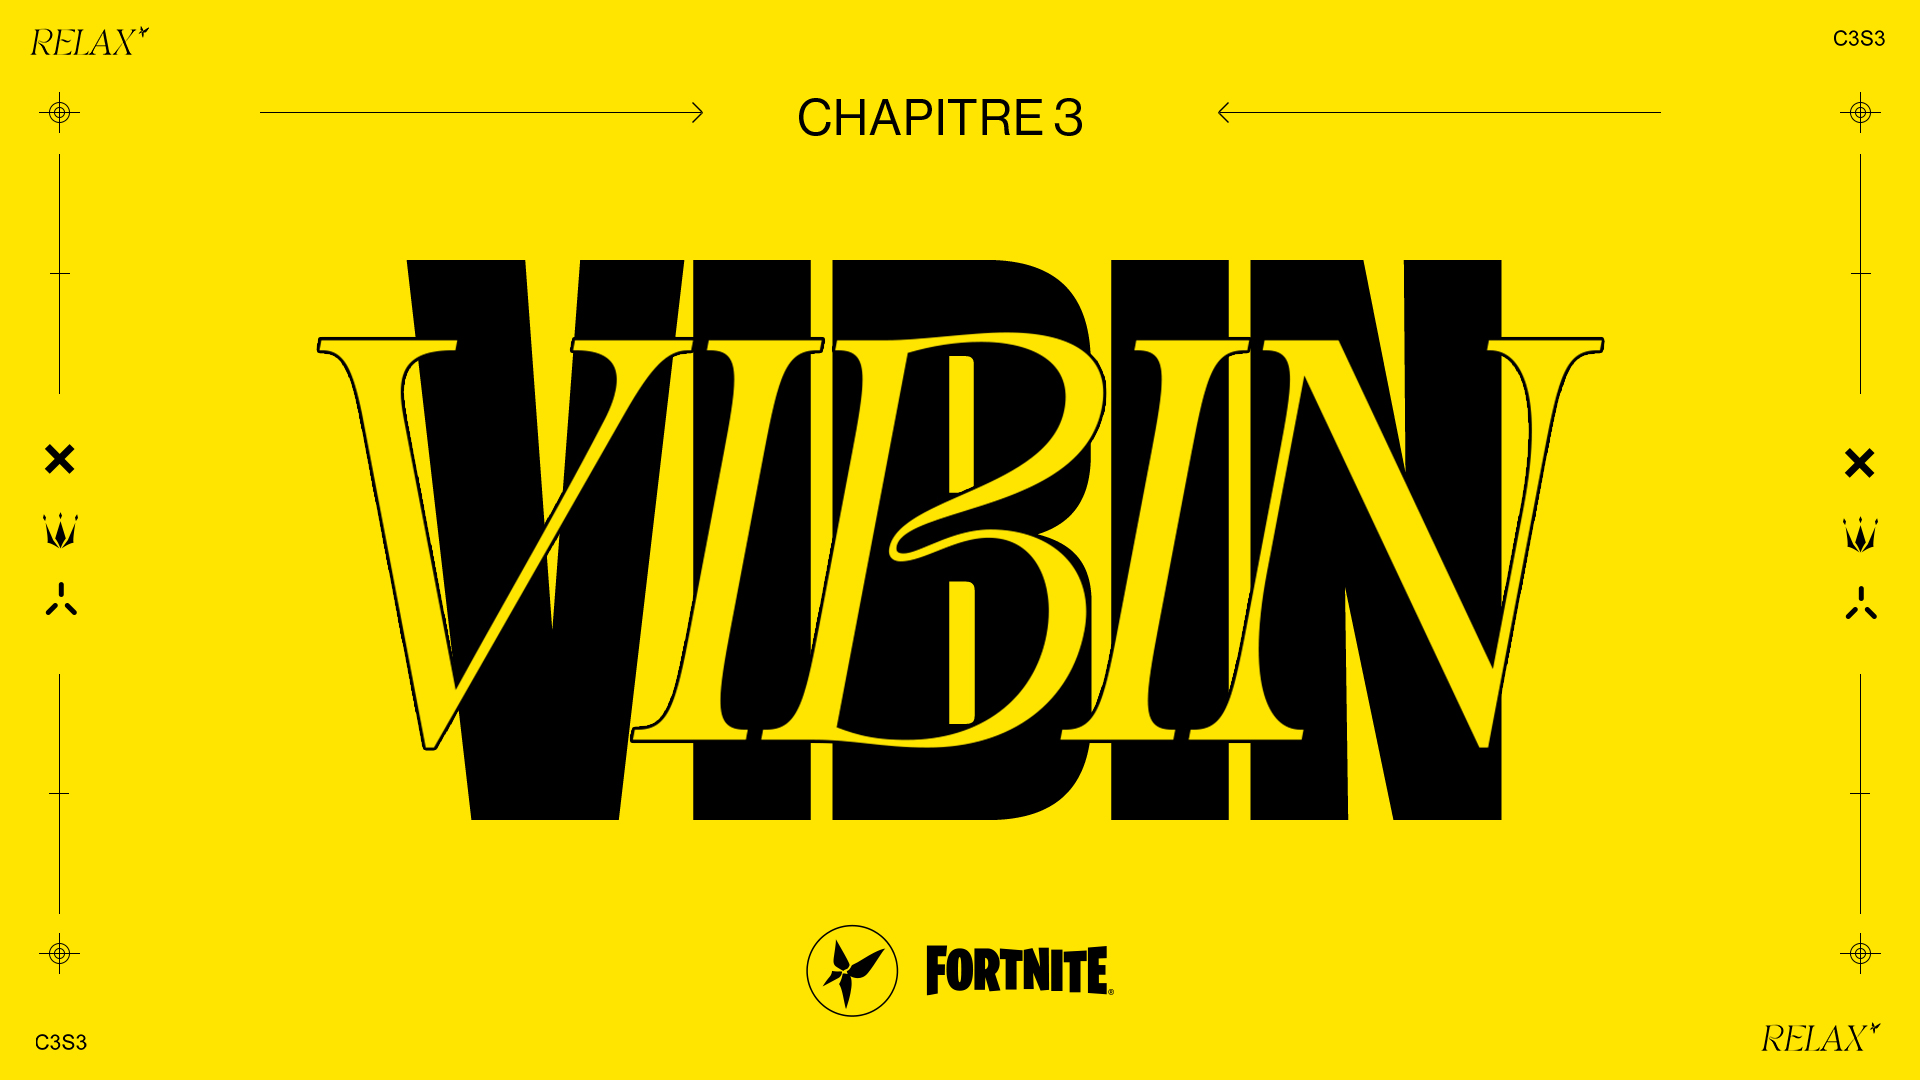 Fortnite teaser chapitre 3 saison 3 vibin 22